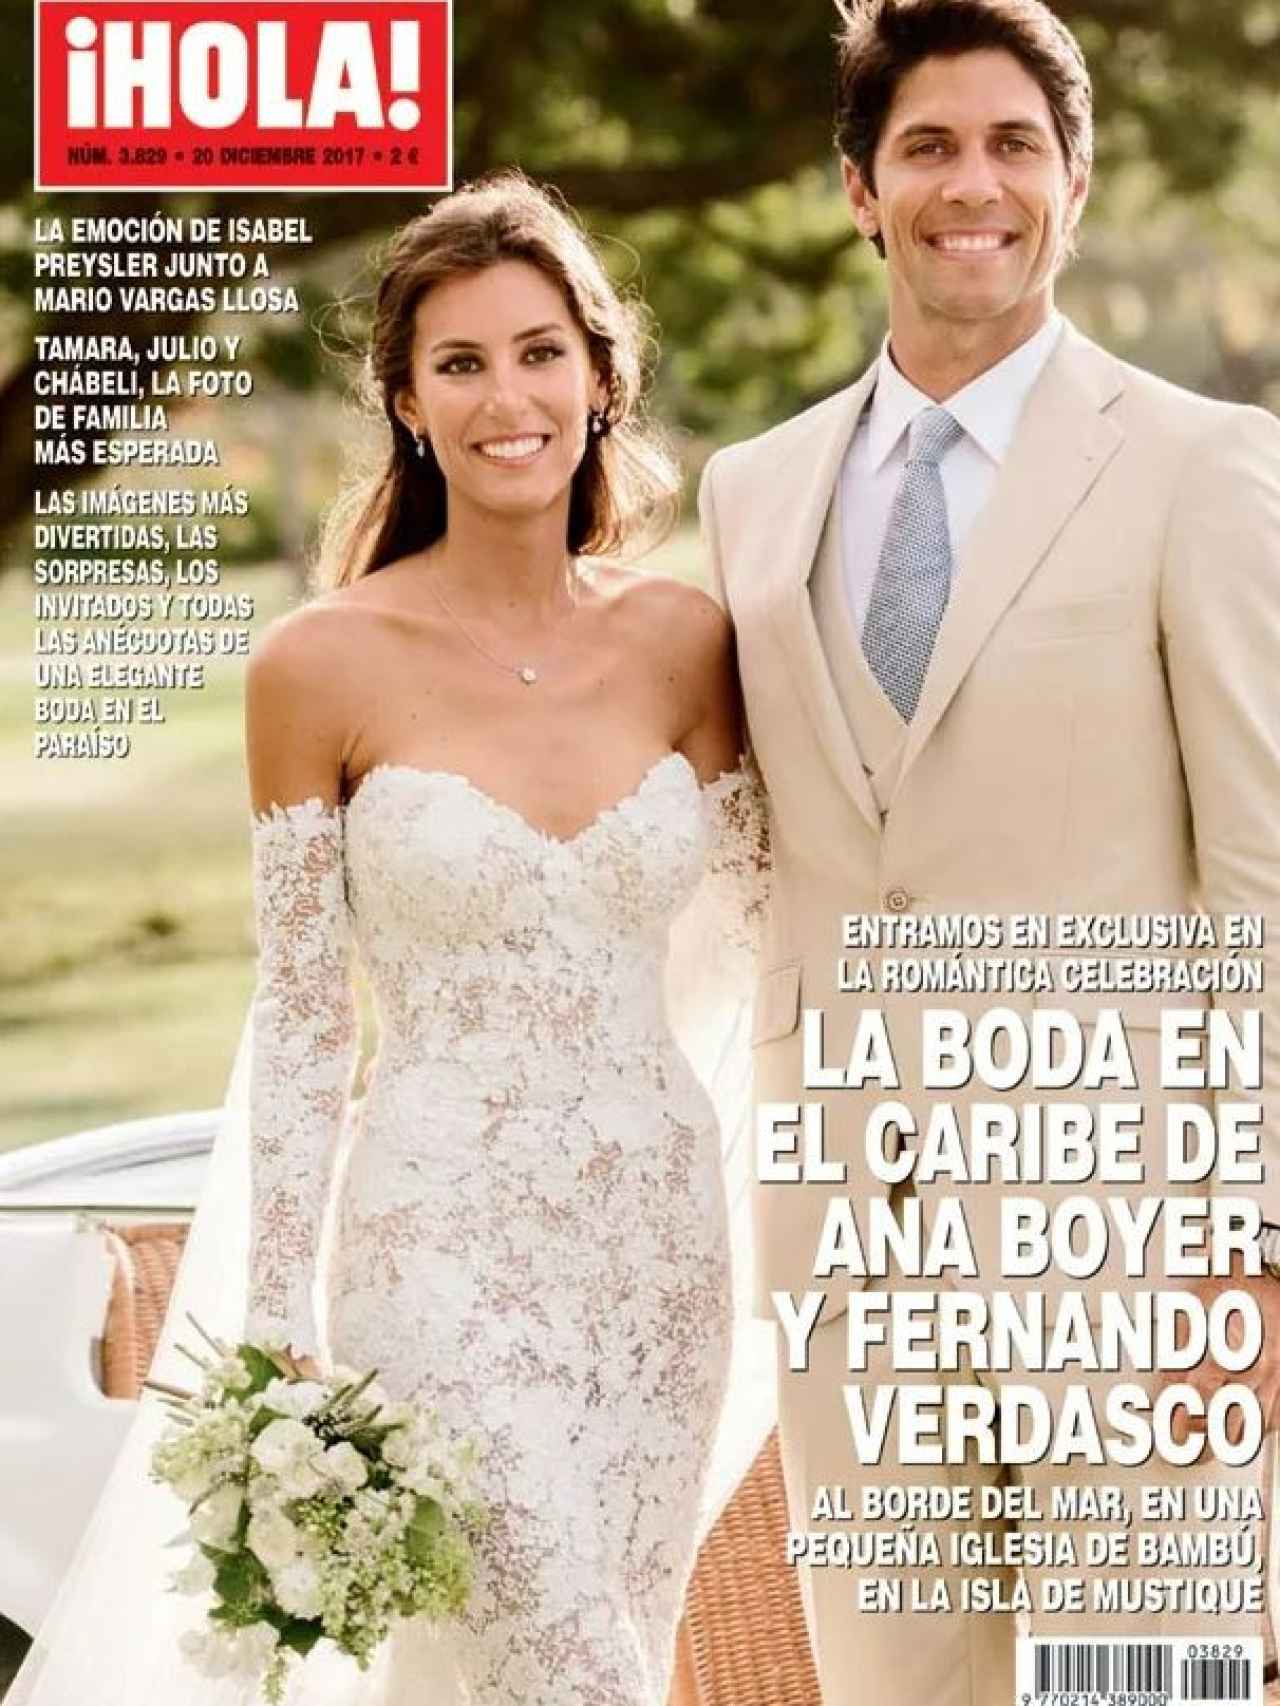 Boda de Ana Boyer y Fernando Verdasco.